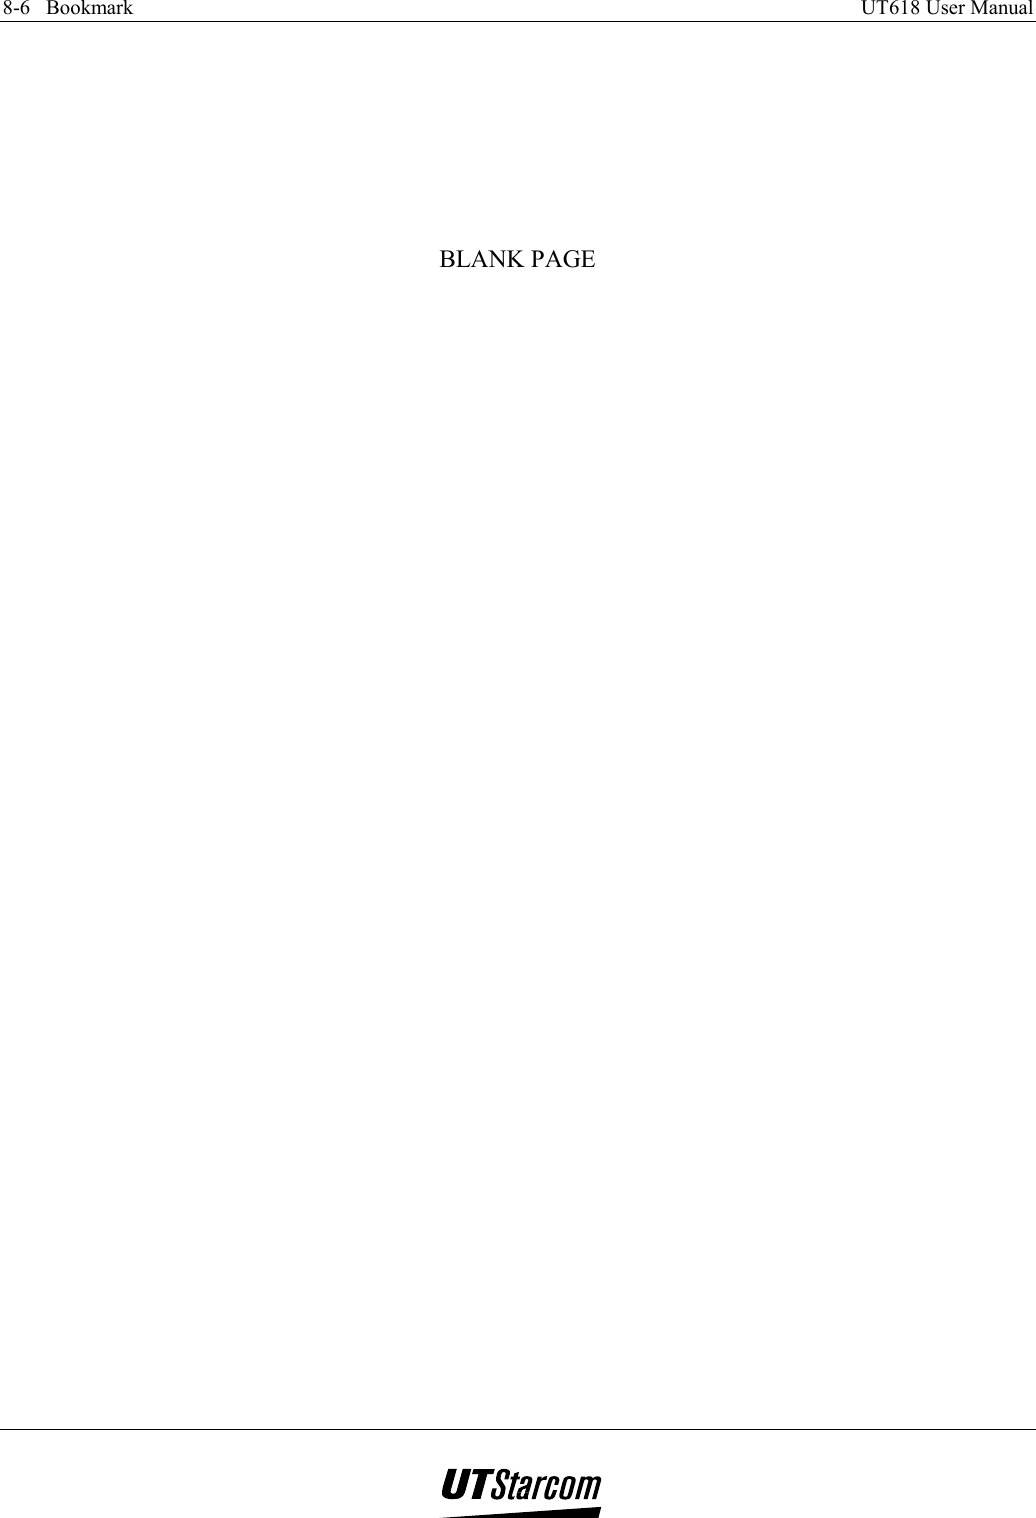 8-6   Bookmark    UT618 User Manual      BLANK PAGE 